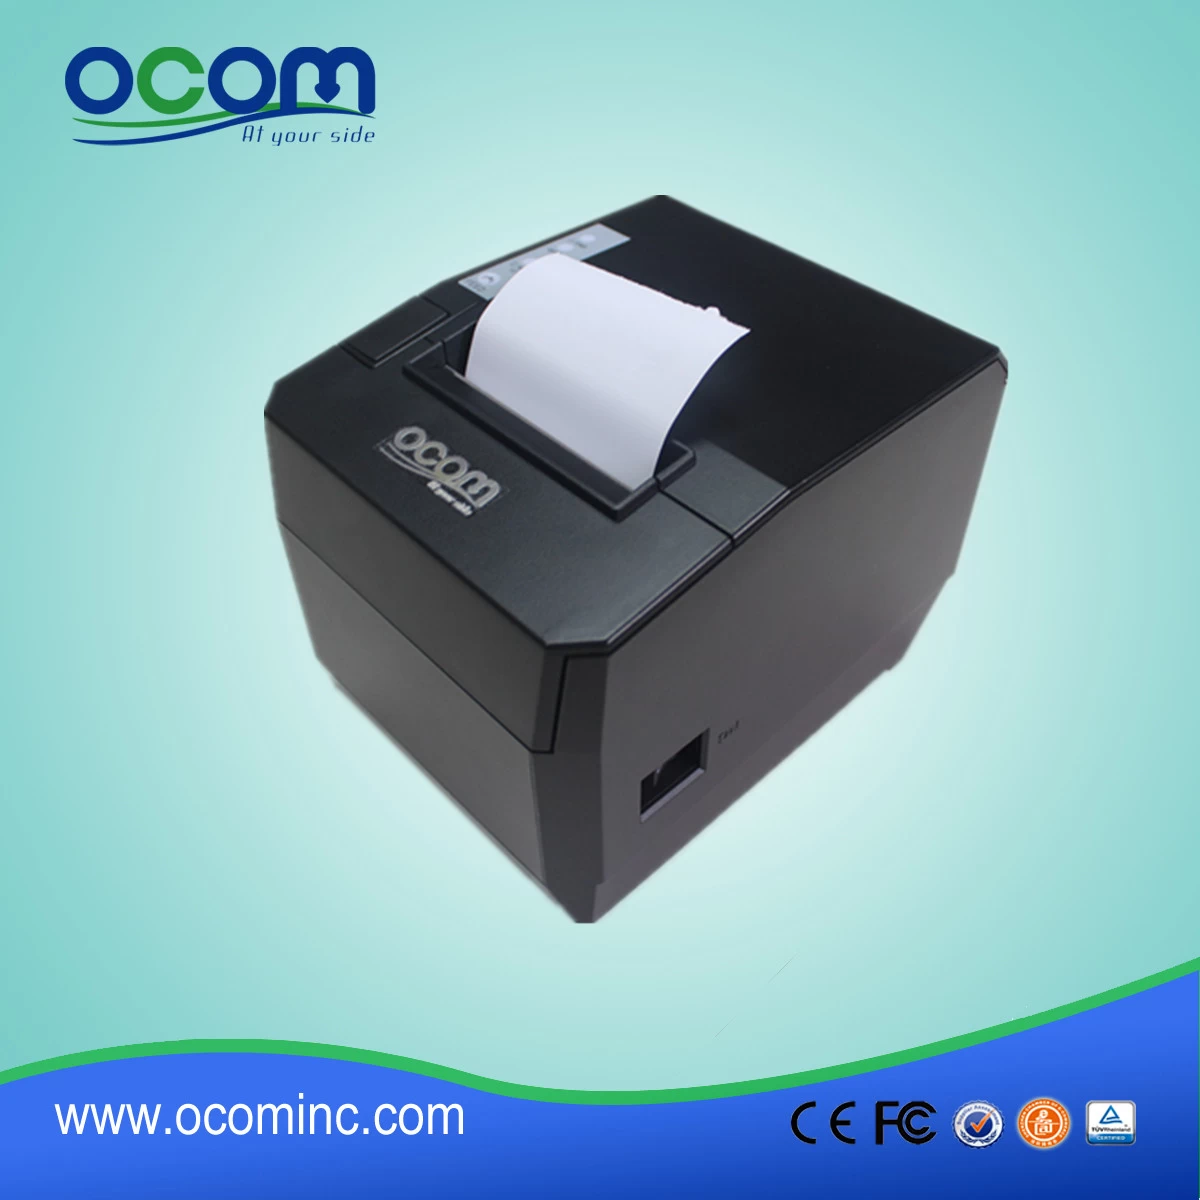 Re: 3" desktop WIFI POS thermal receipt printer-OCPP-88A-W